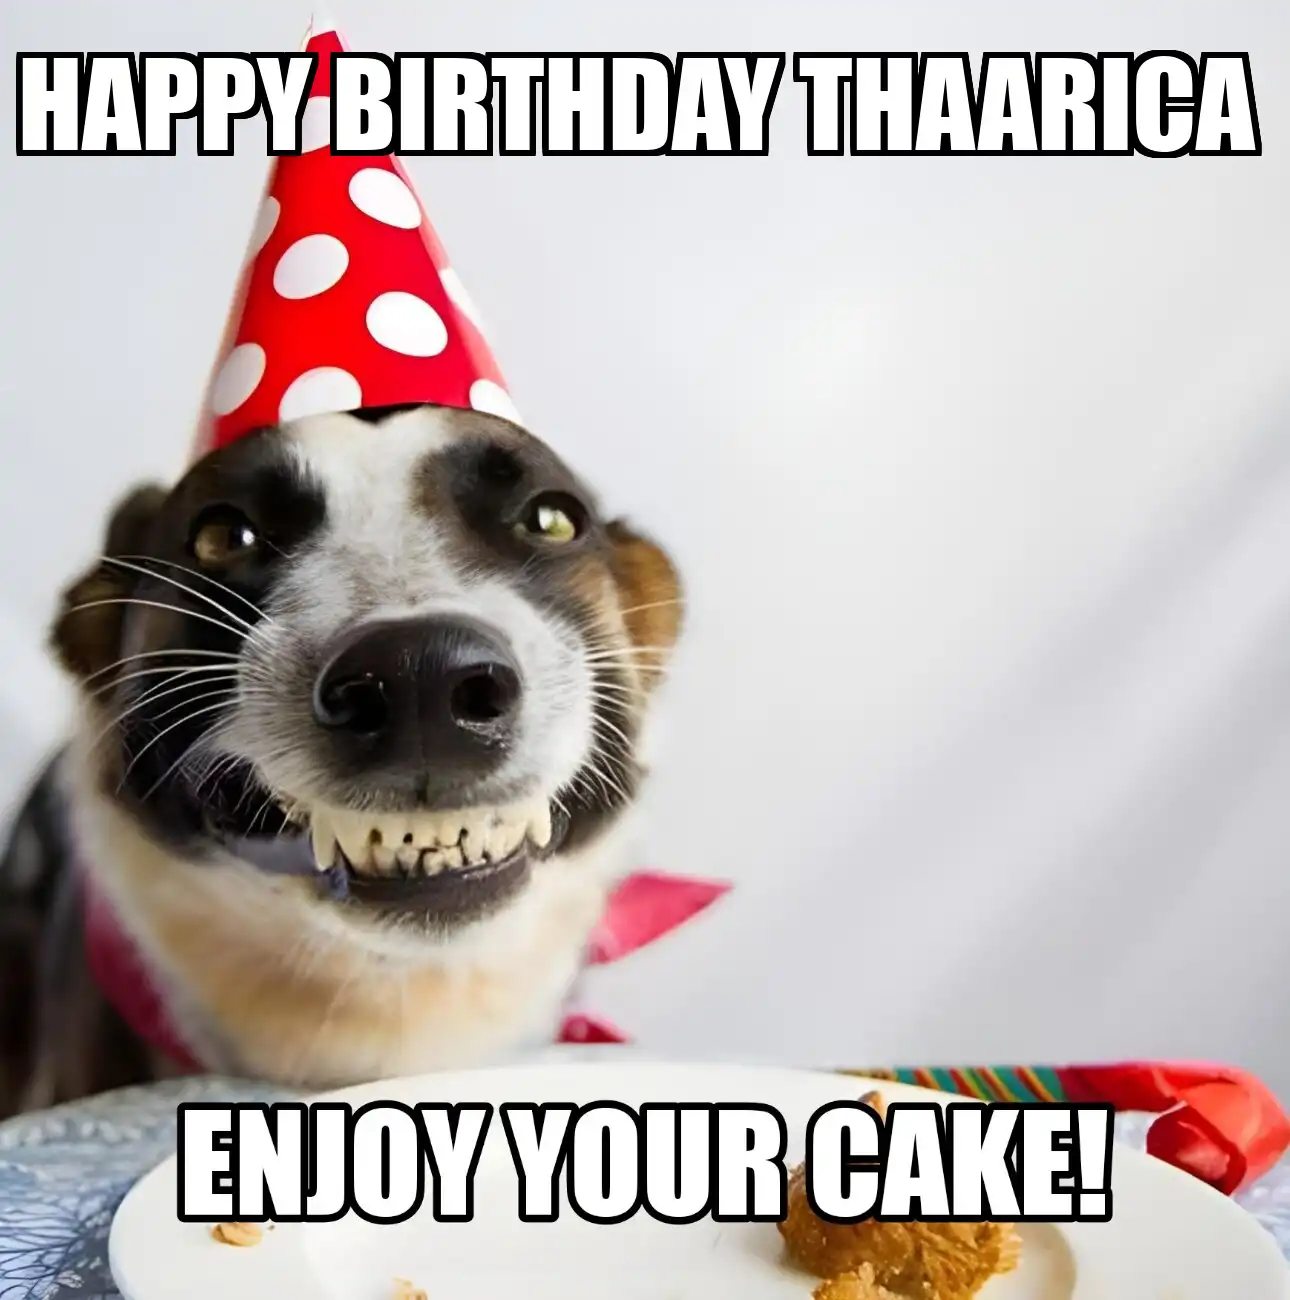 Happy Birthday Thaarica Enjoy Your Cake Dog Meme